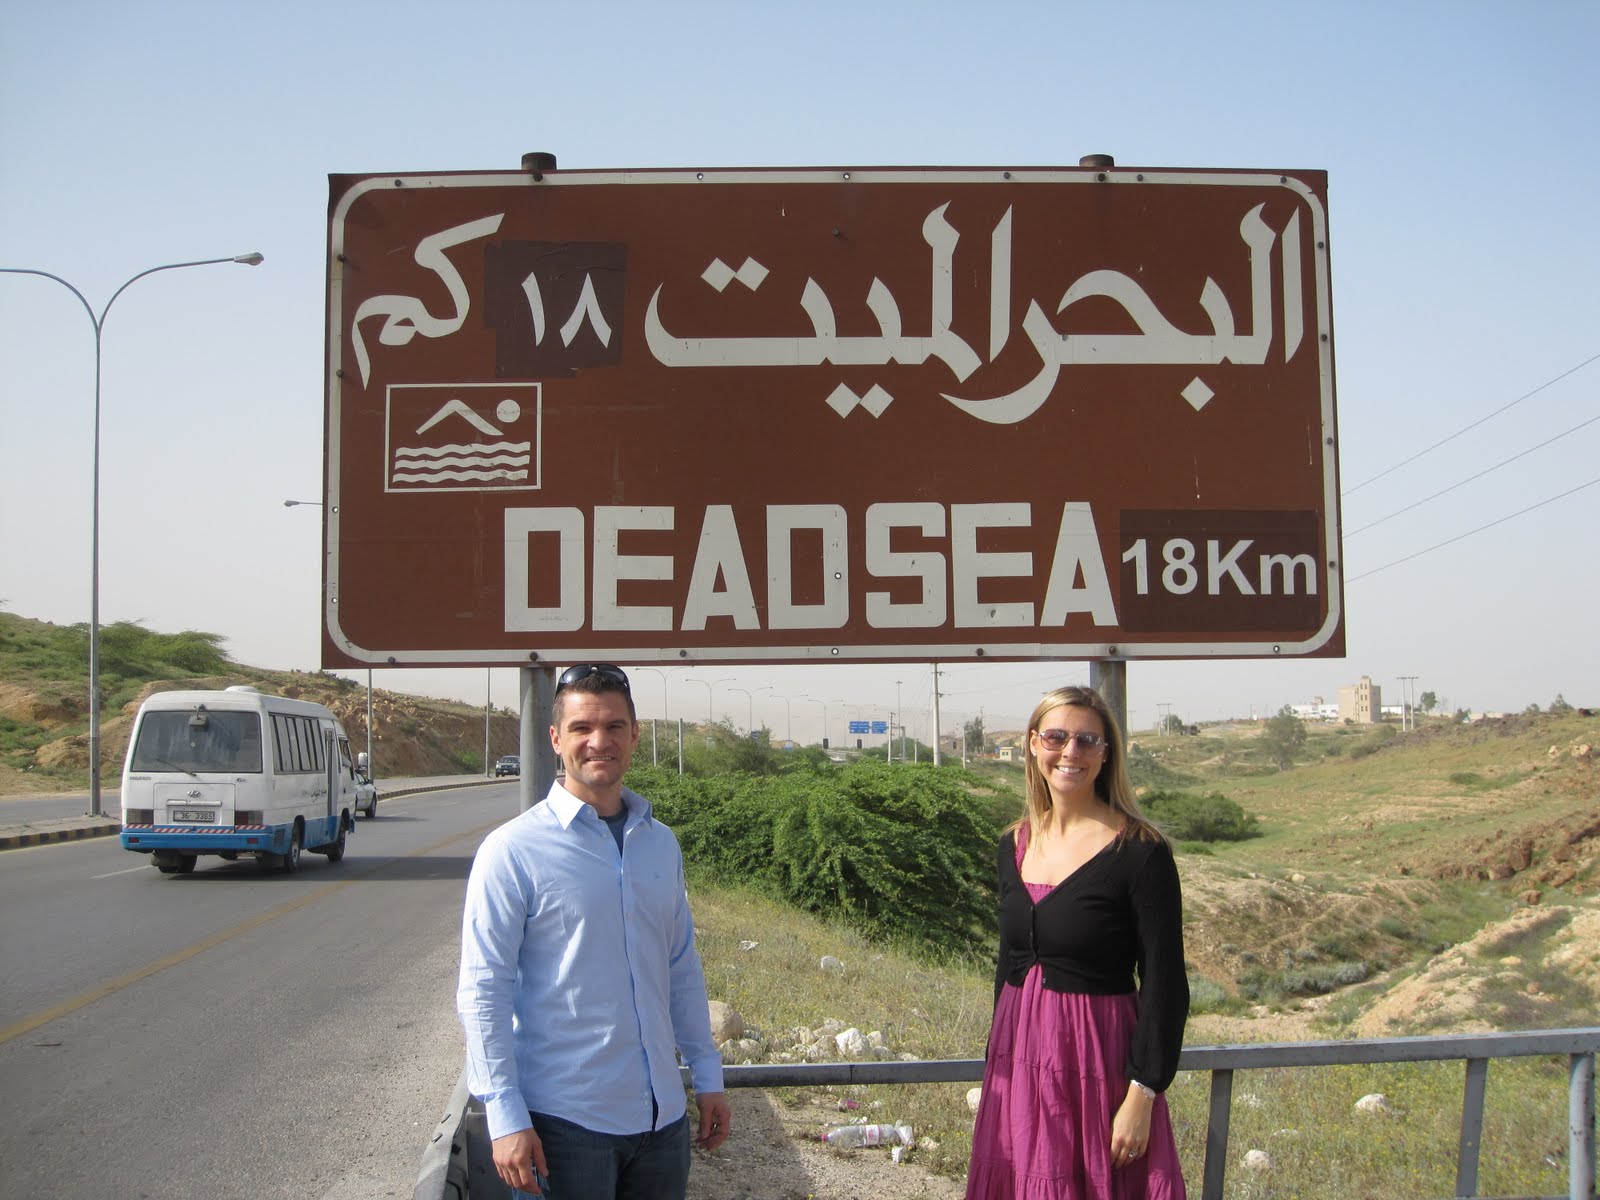 European Adventure: Jordan - Dead Sea and